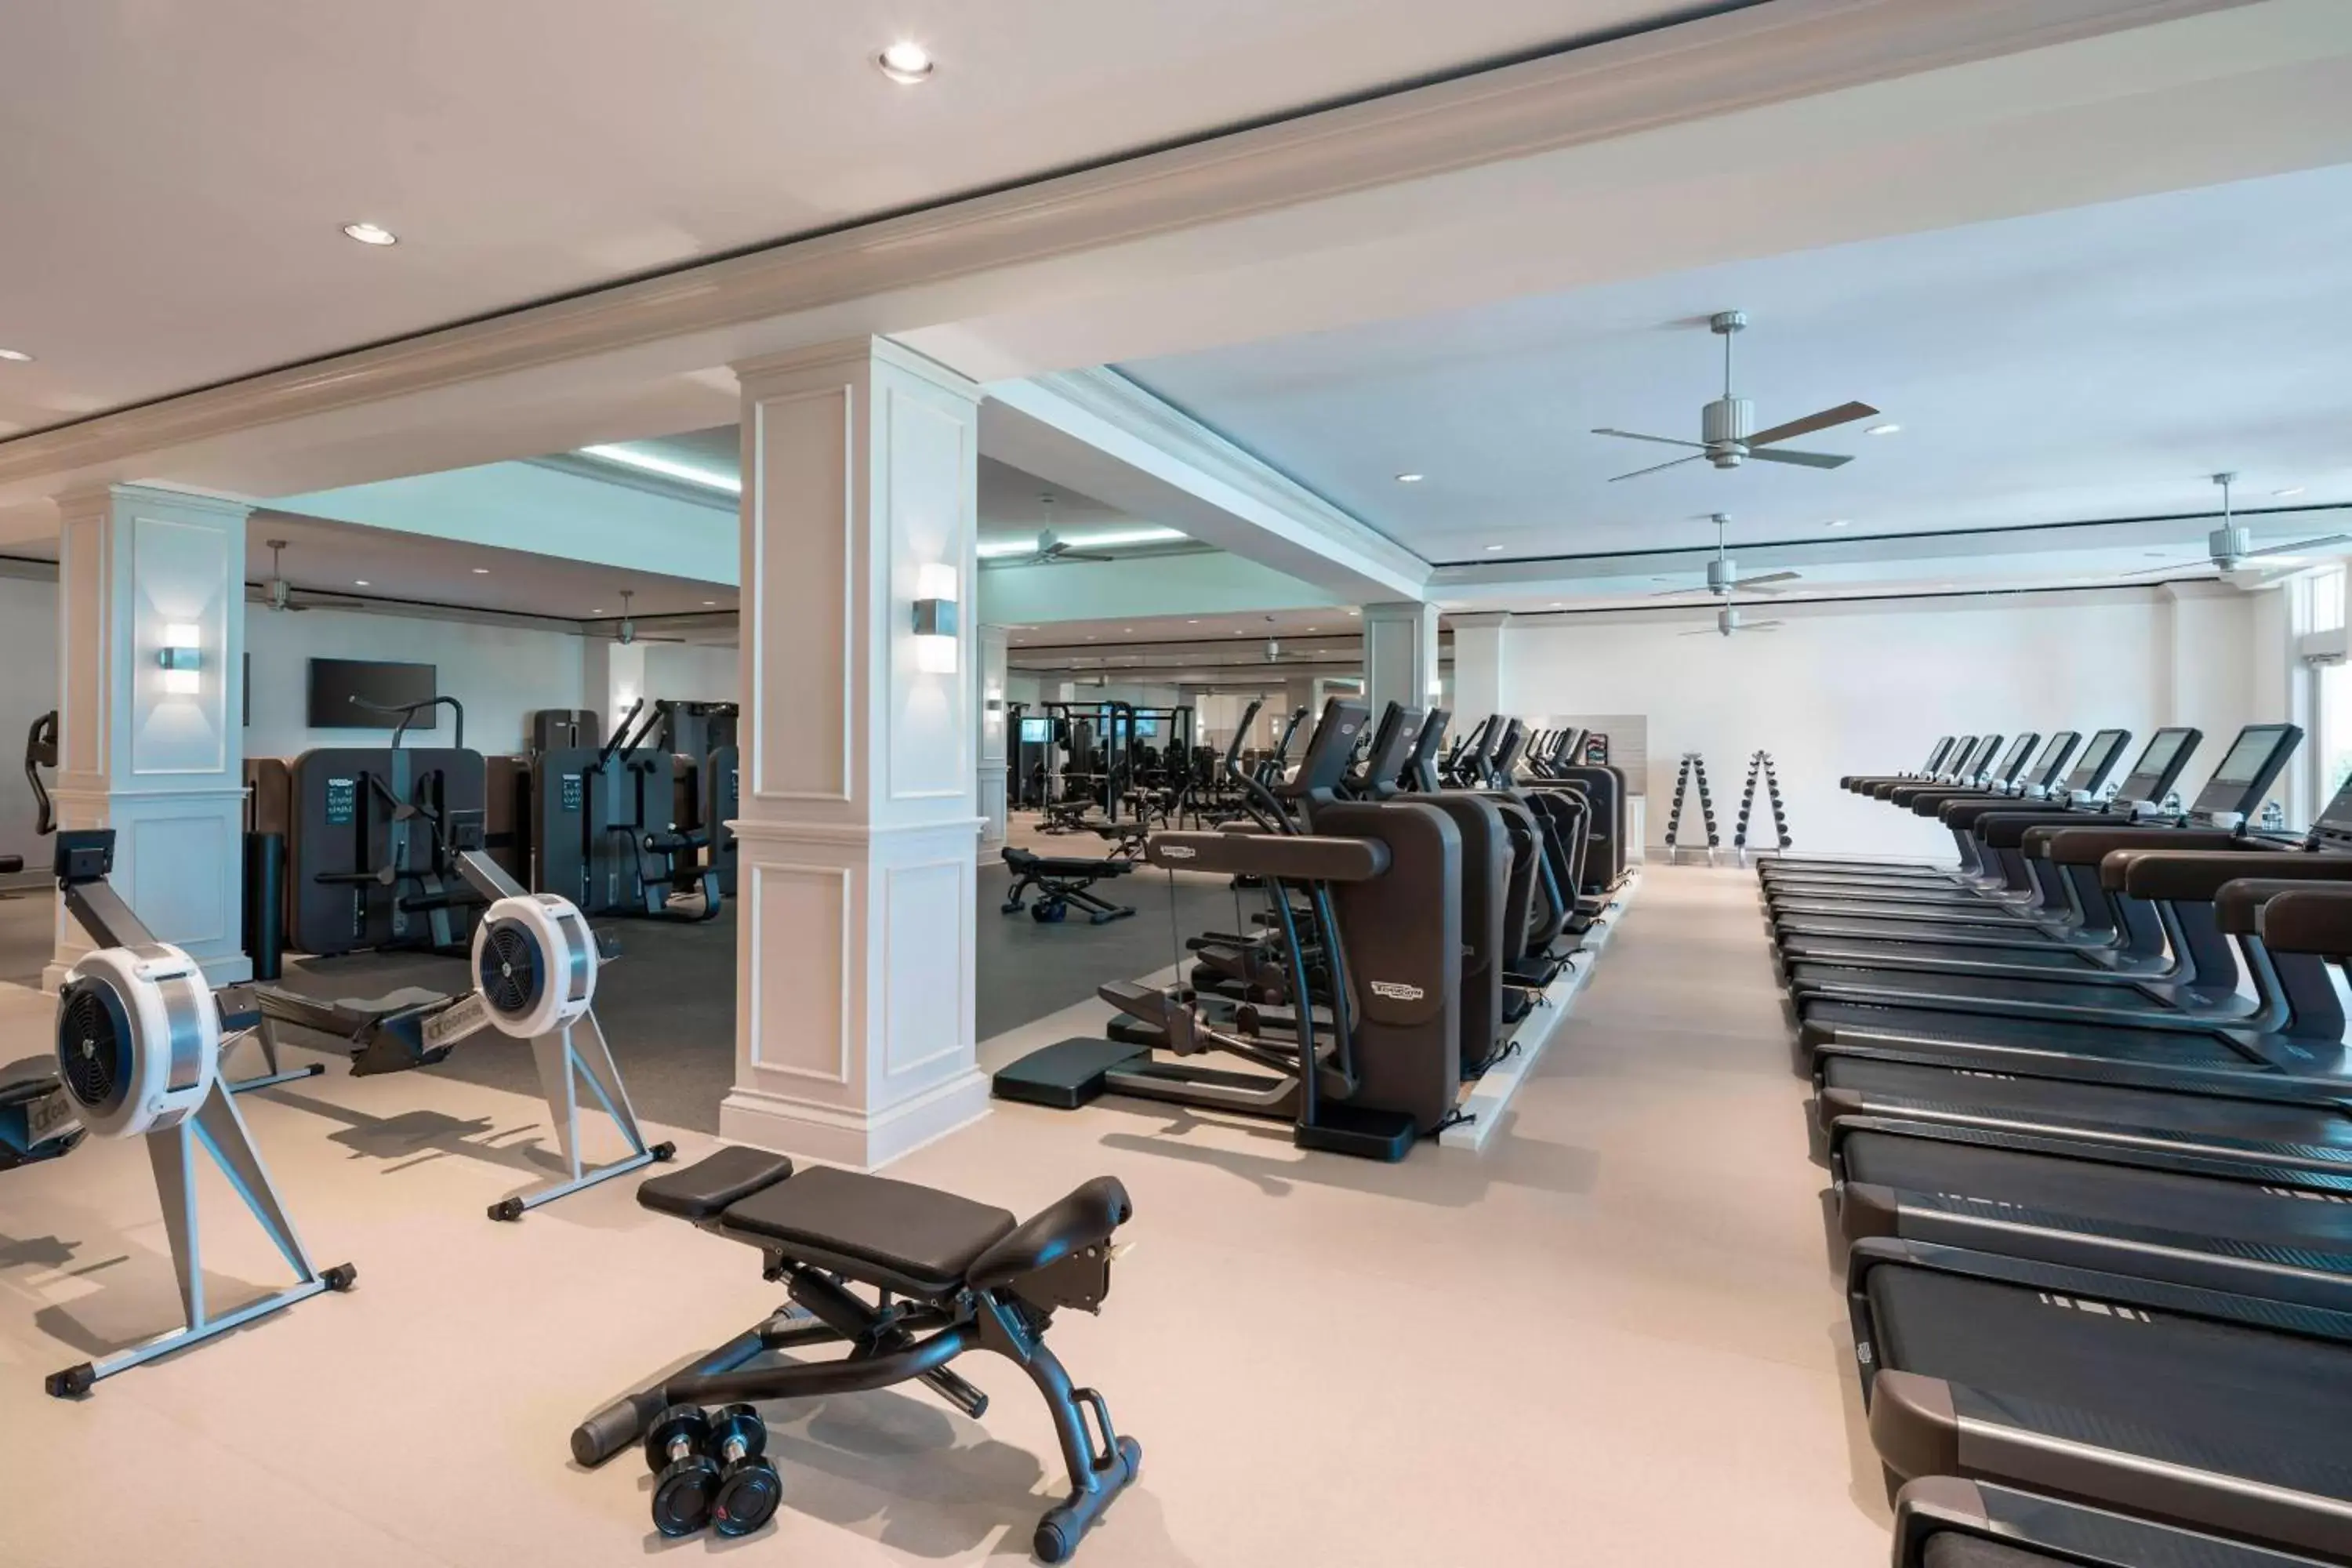 Fitness centre/facilities, Fitness Center/Facilities in JW Marriott Orlando Grande Lakes